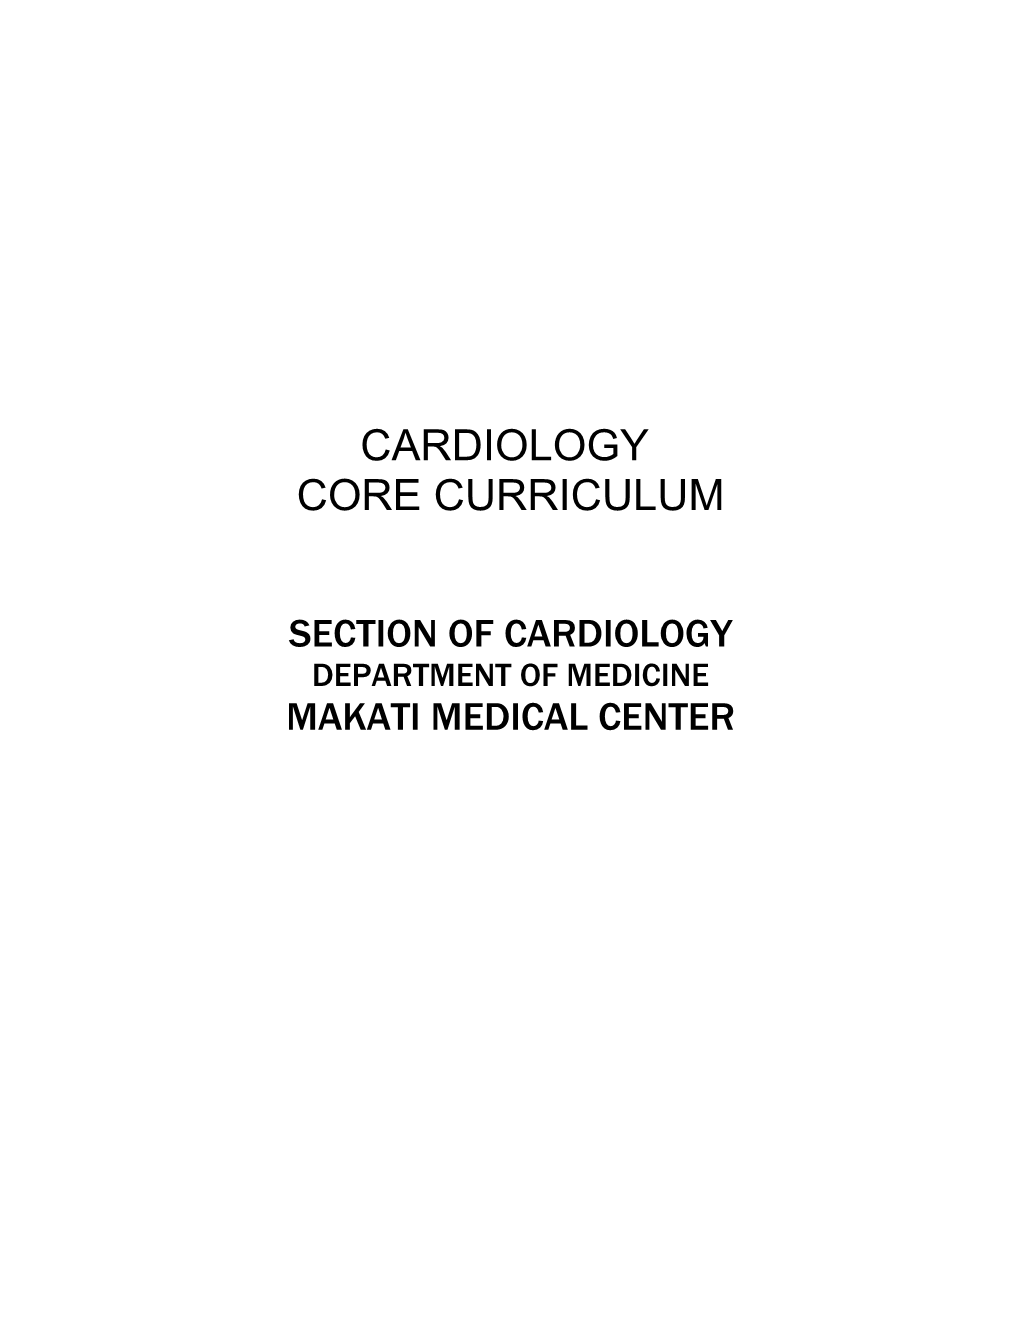 Cardilogy Core Curruculum